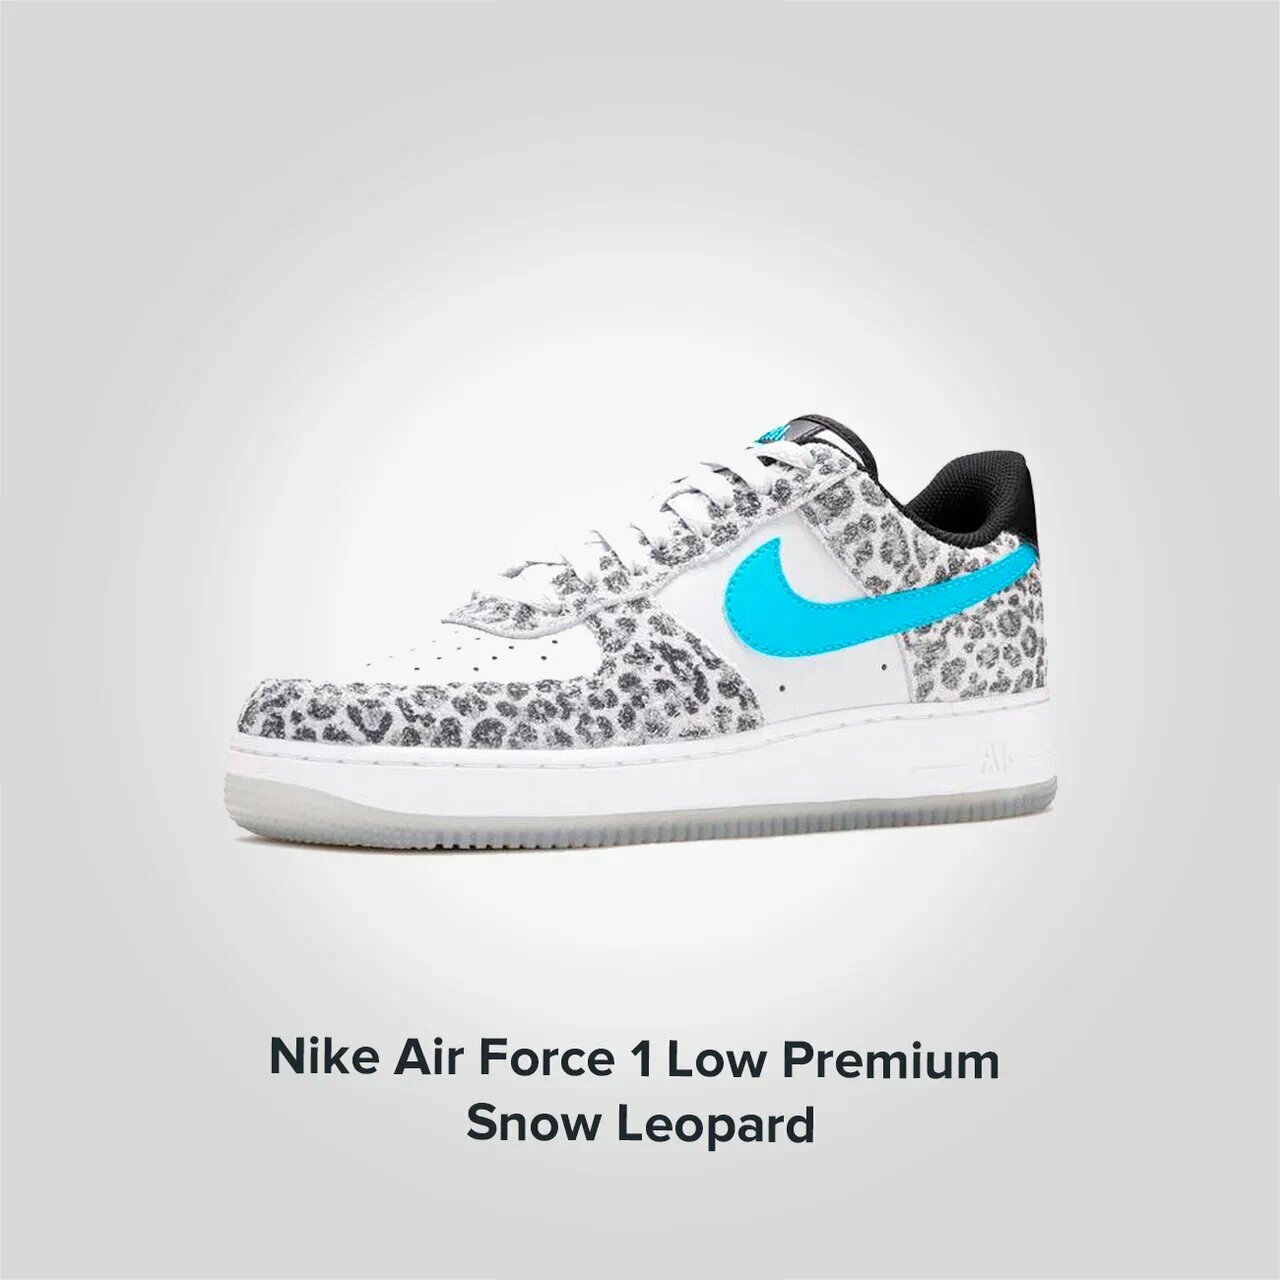 Nike Air Force 1 Low Premium Snow Leopard